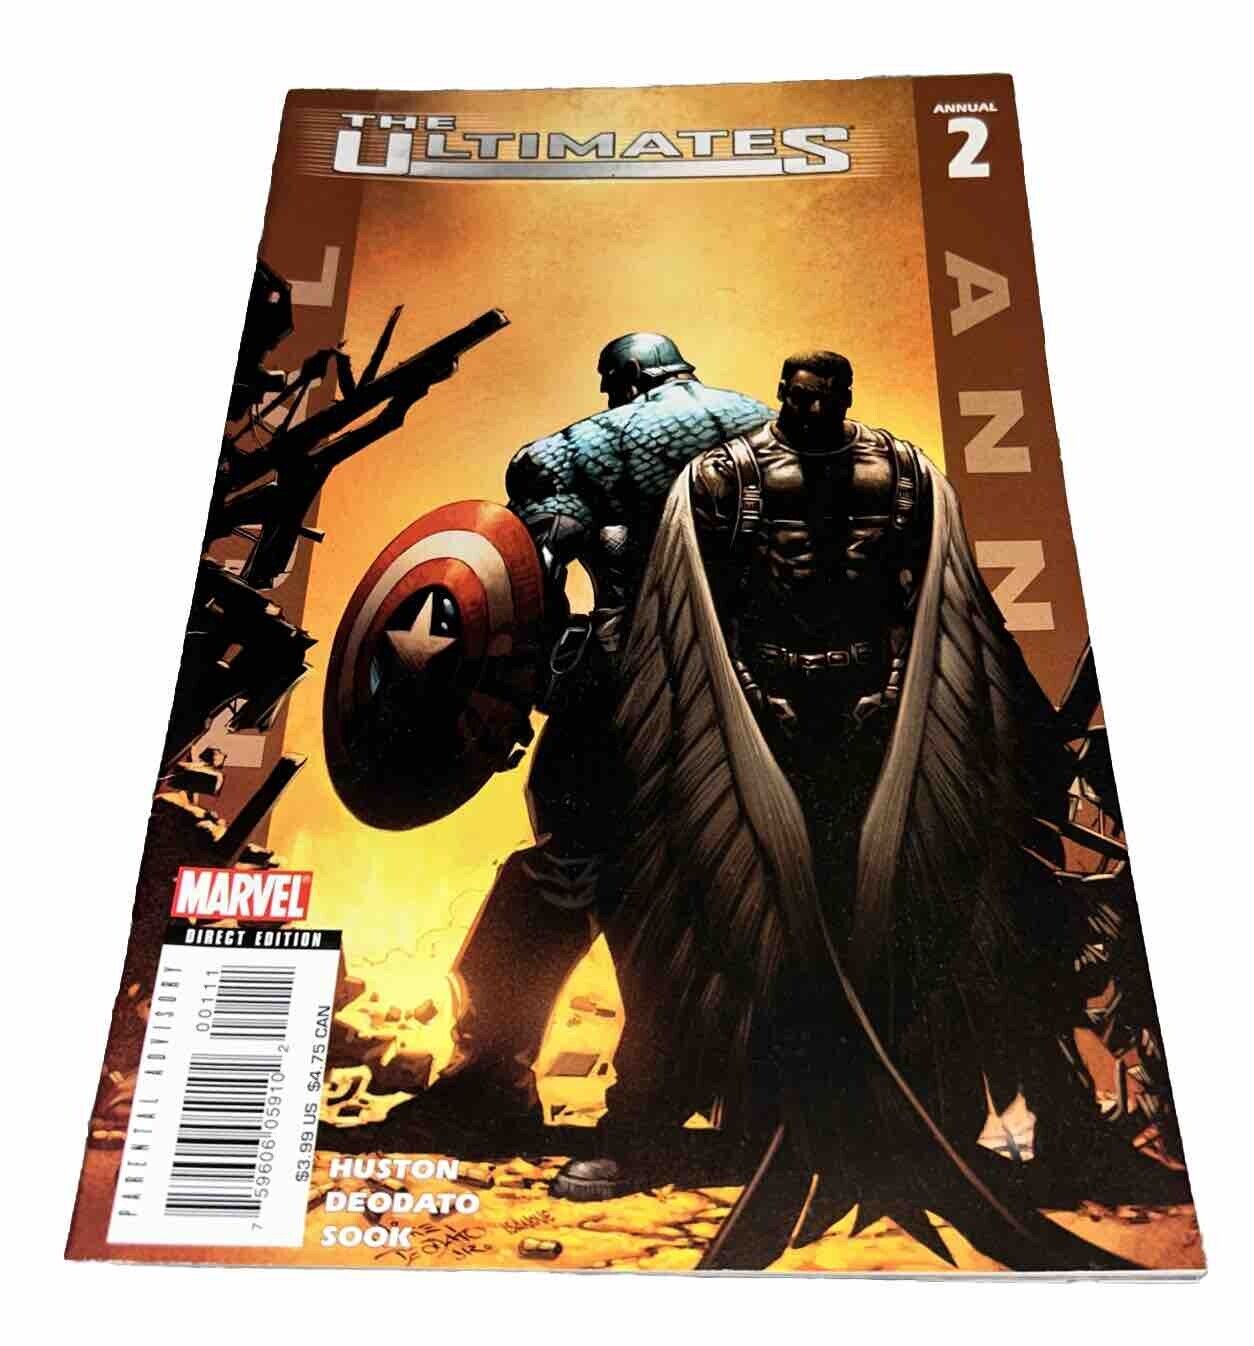 The Ultimates Annual #2 (Marvel Comics, October 2006) Comic Book